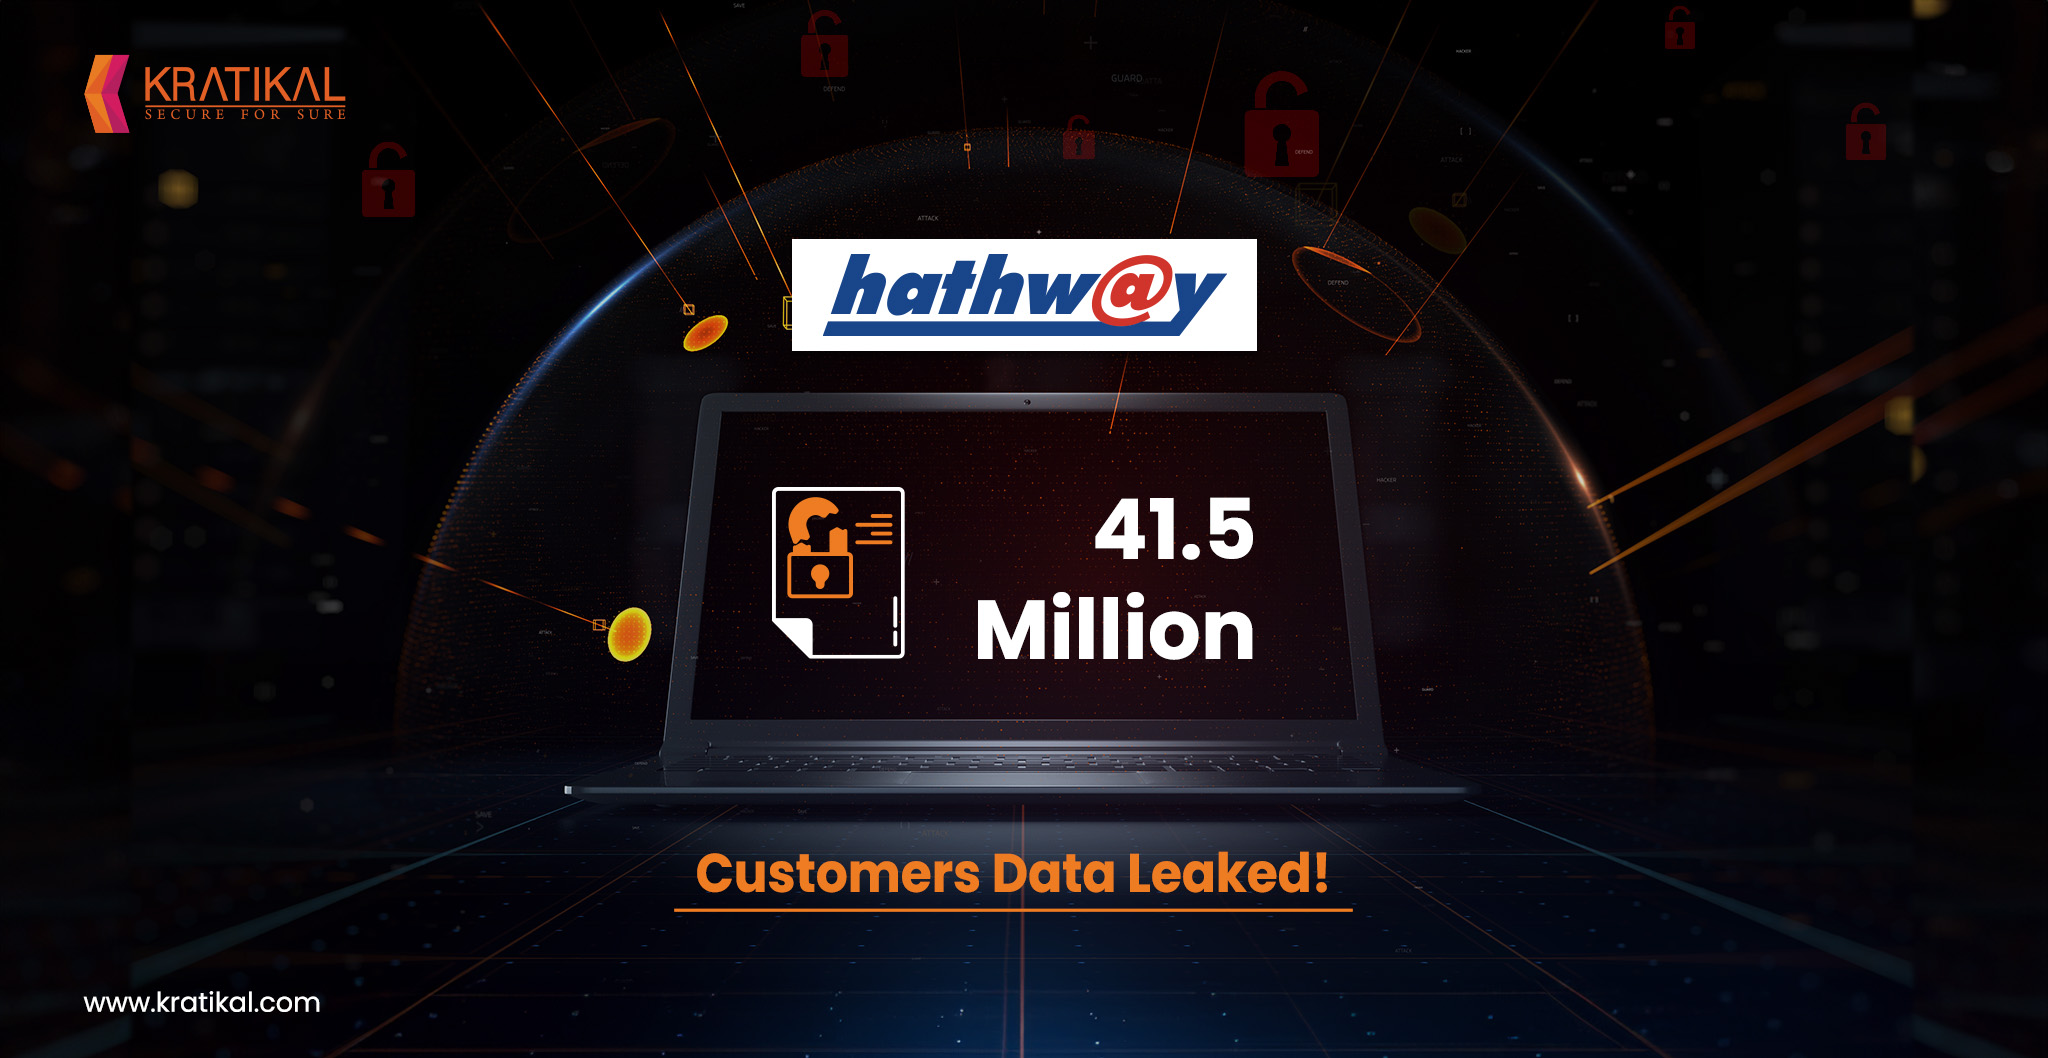 Data Breach Strikes Hathway: 41.5 Million Customers Data Exposed